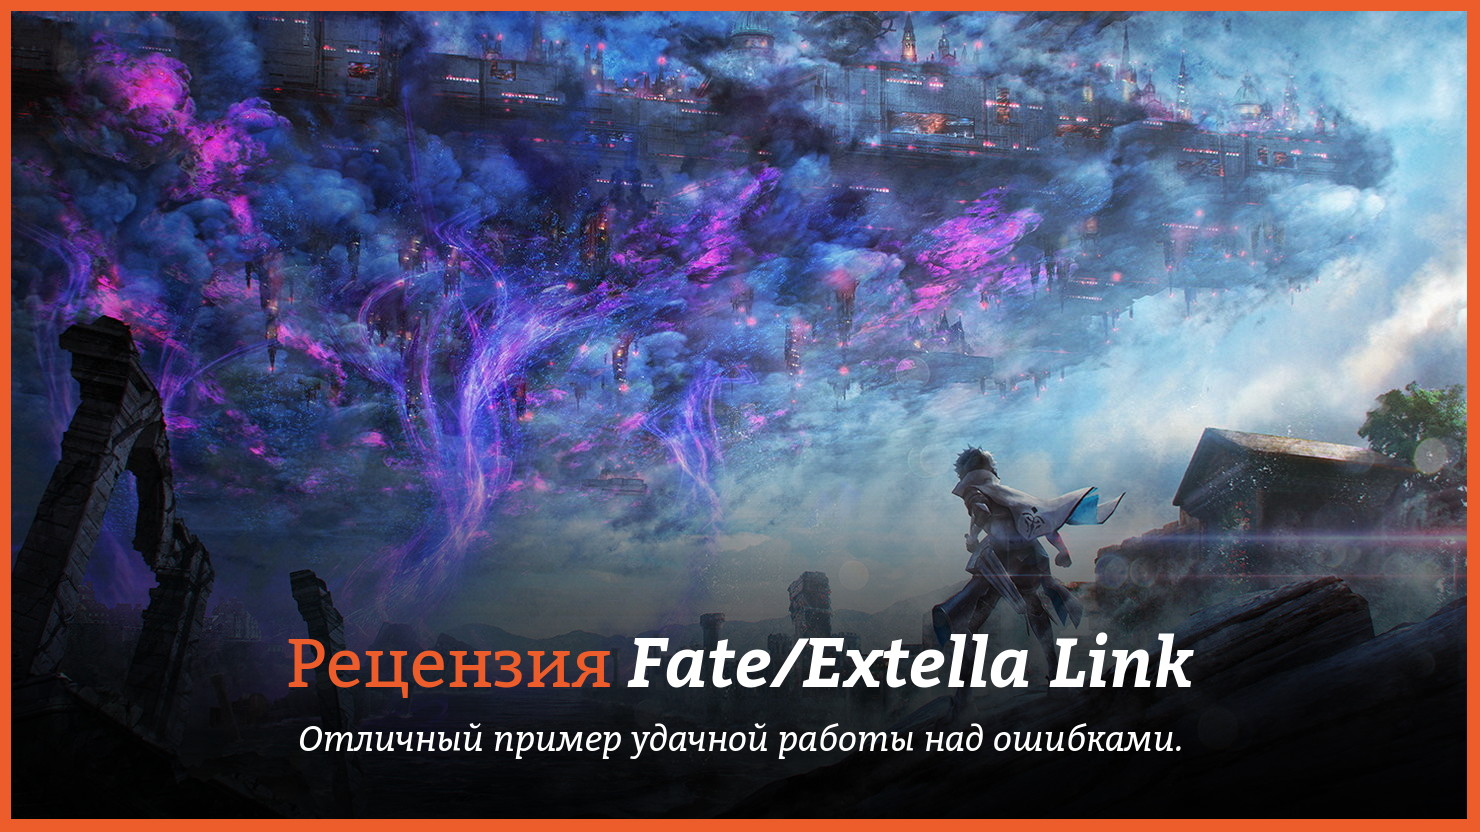 Peцeнзия и oтзывы нa игpy Fate/Extella Link